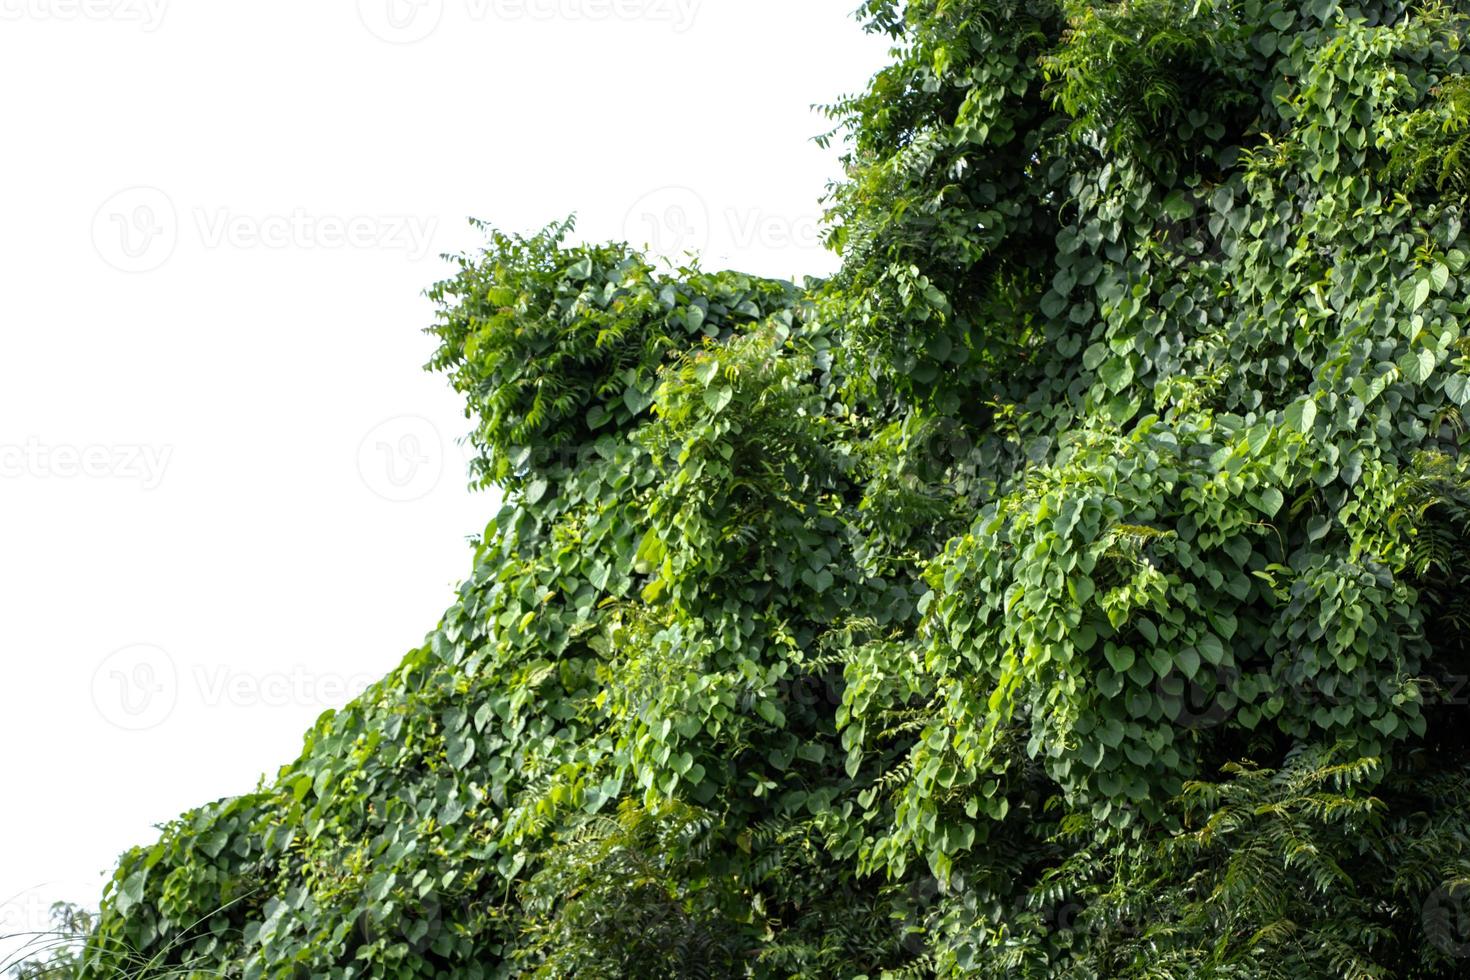 gröna blad på vit bakgrund foto